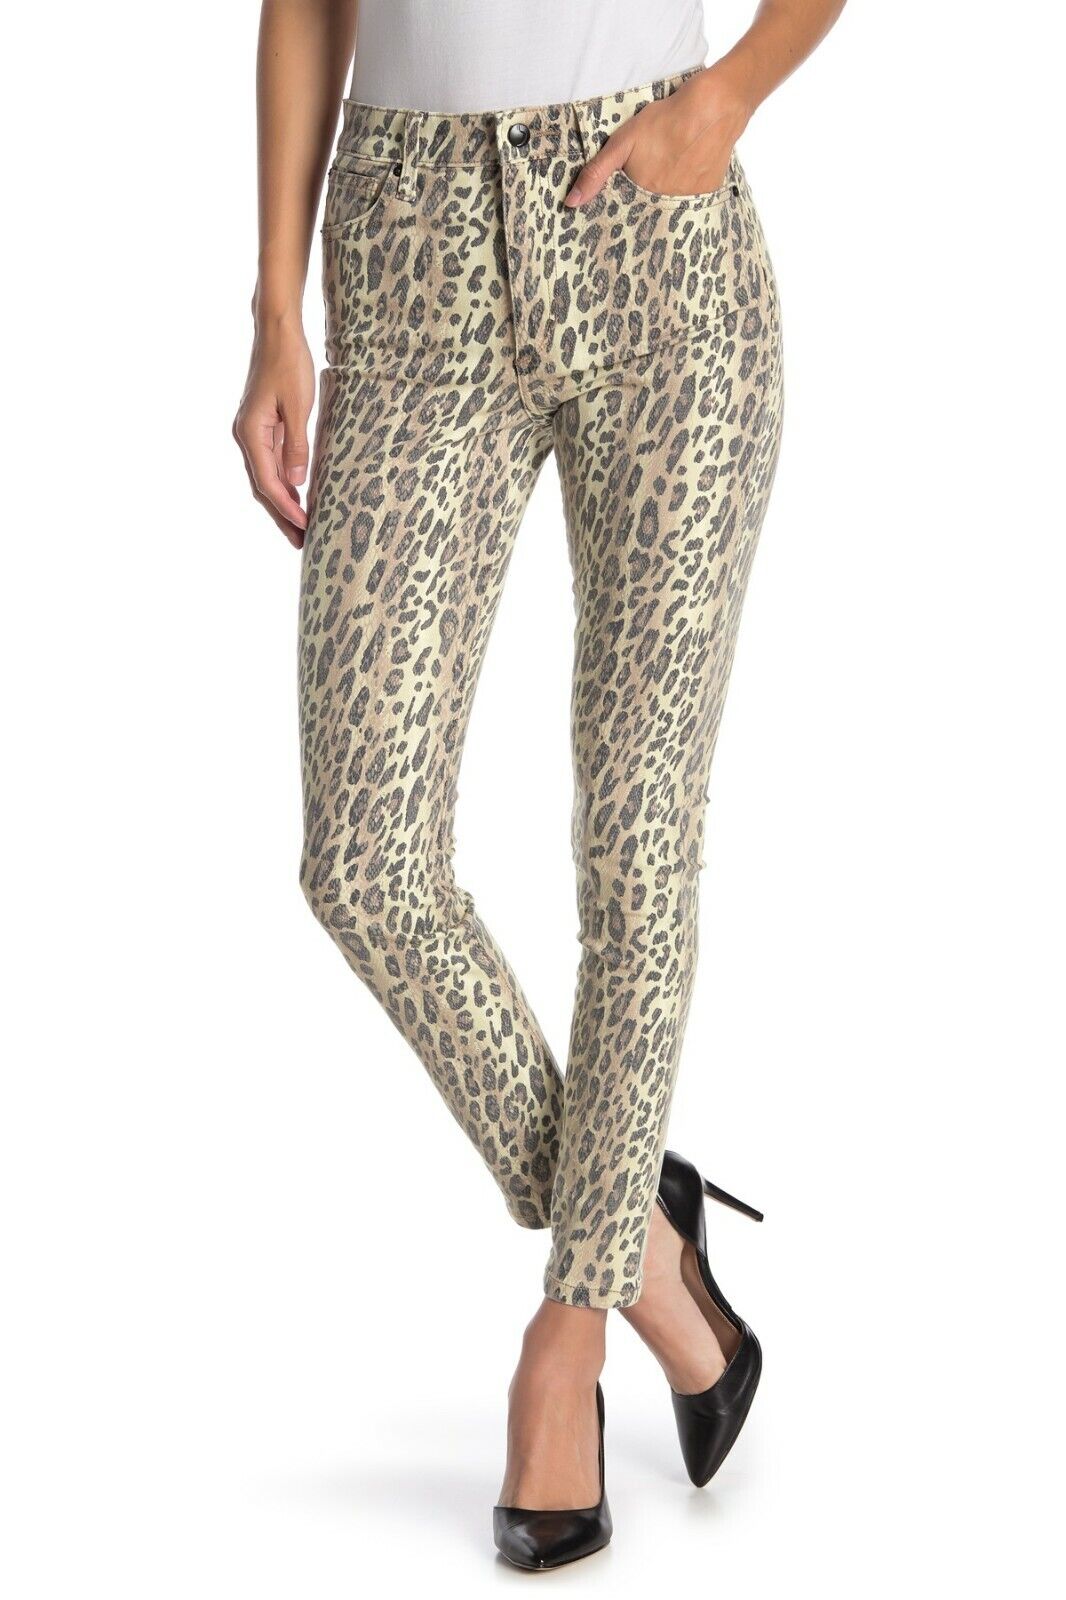 Joes Jeans Women 24 High Rise Skinny Ankle Hybrid Tan Leopard Cheetah Denim Pant